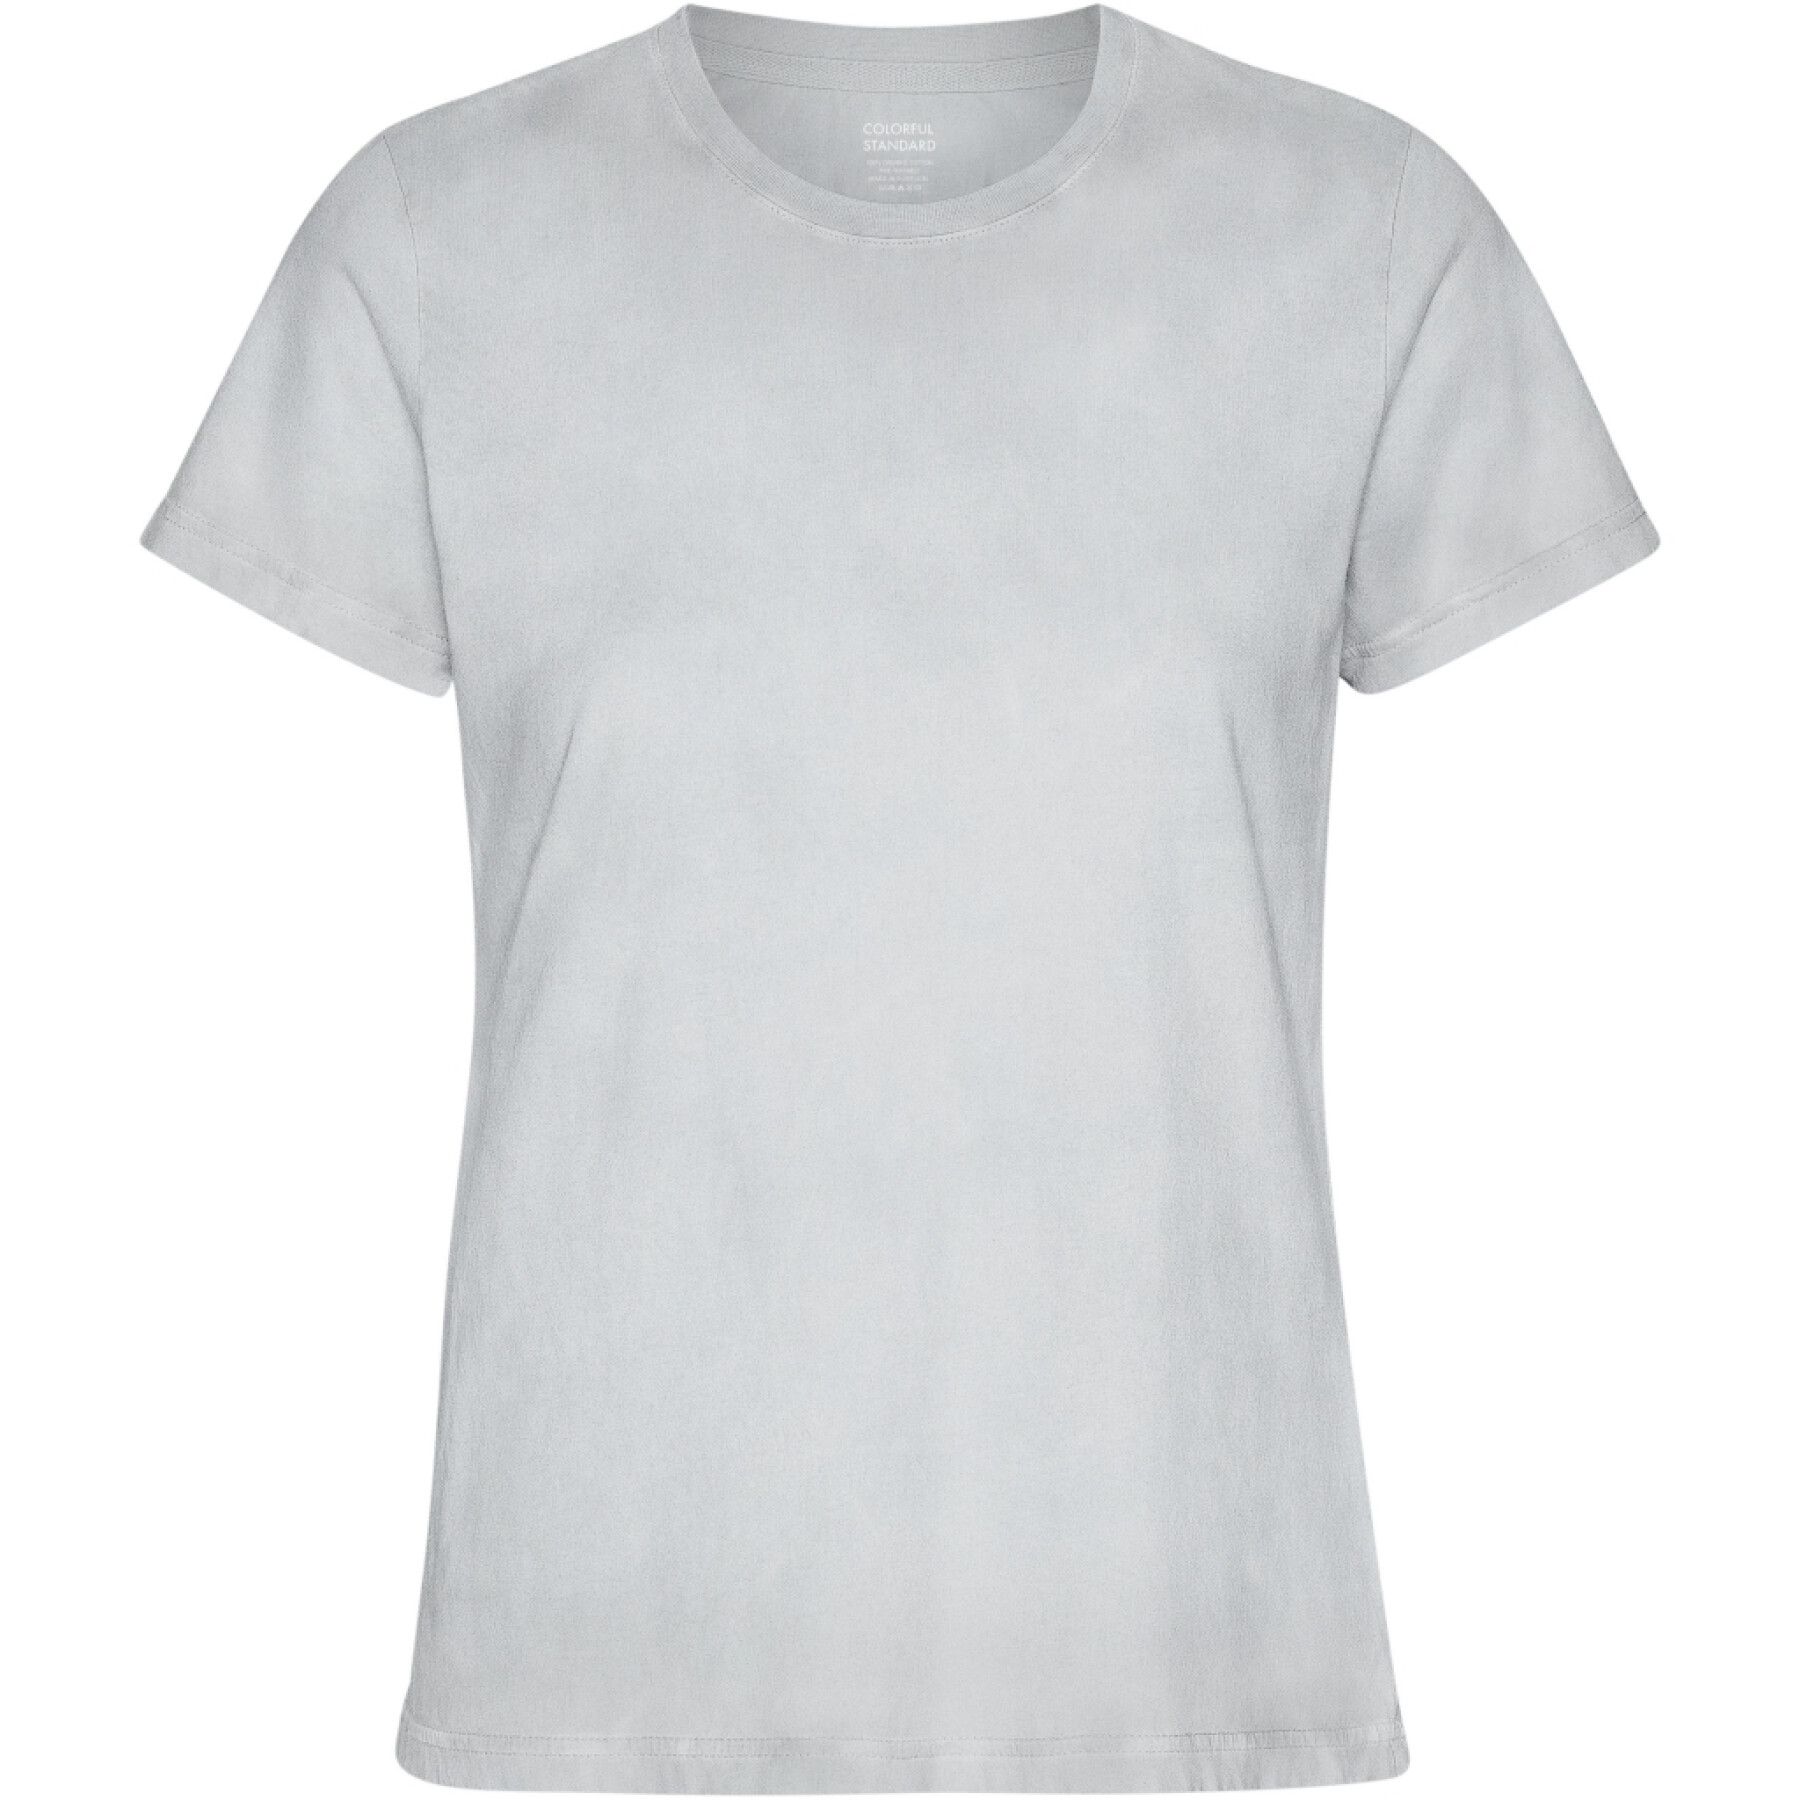 Women's T-shirt Colorful Standard Light Organic Faded Grey